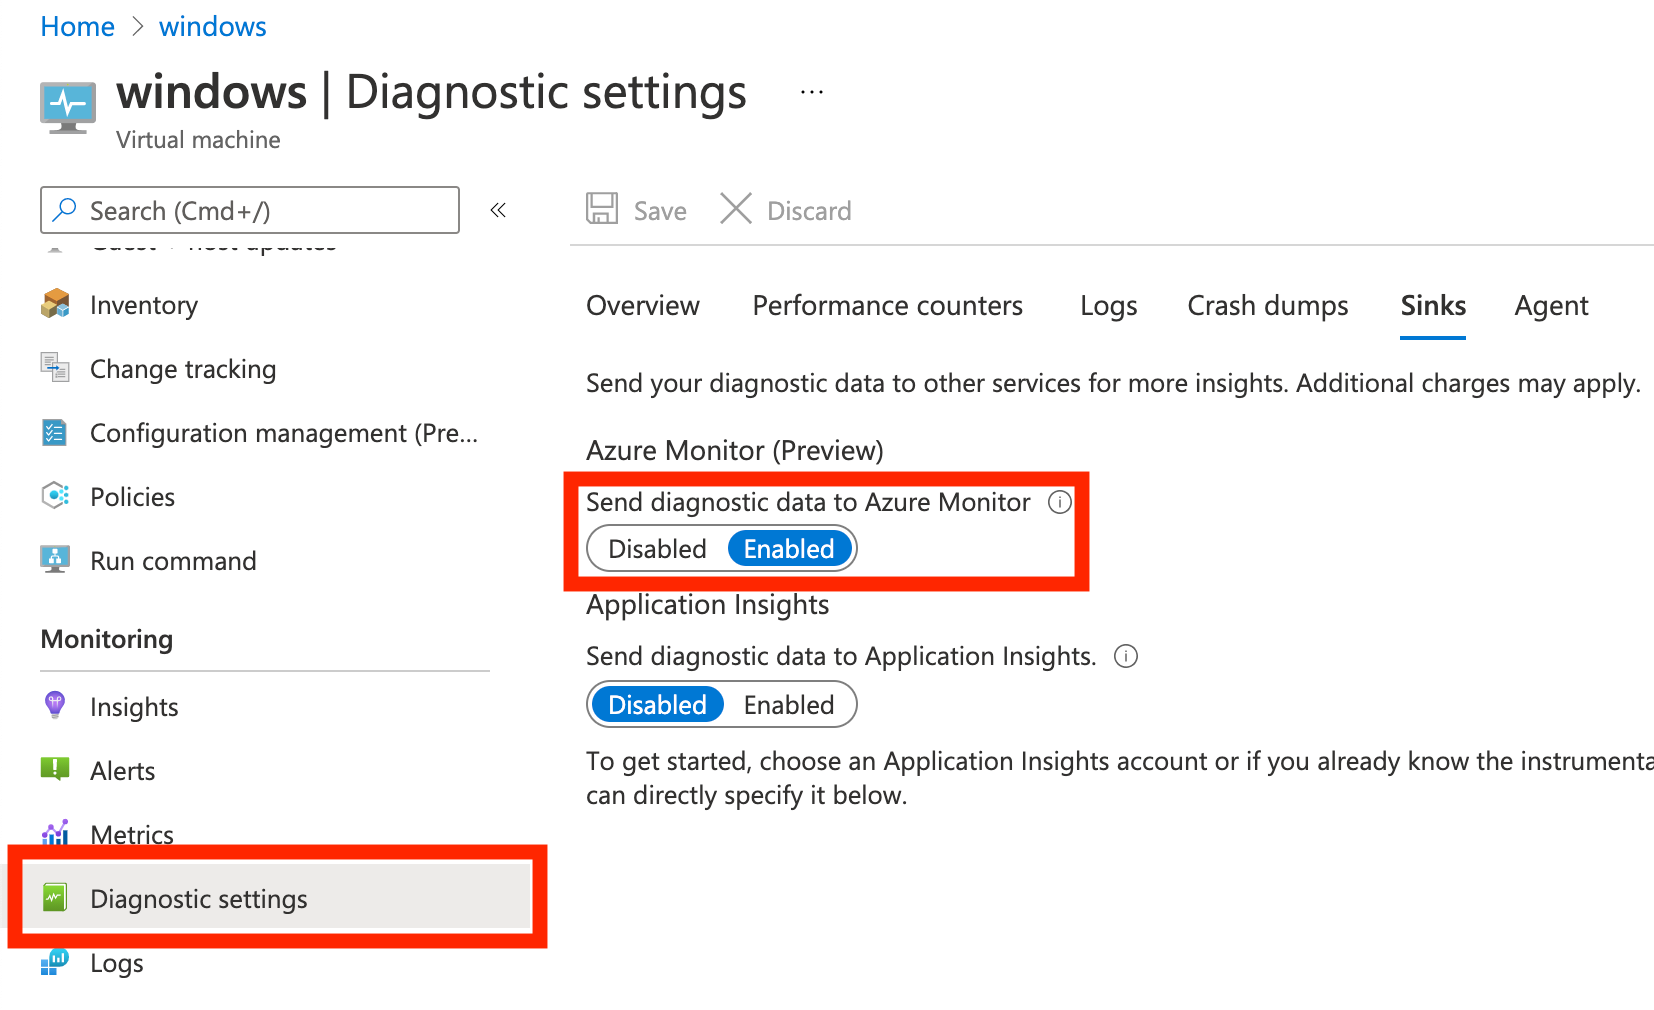 Send diagnostic data to Azure Monitor